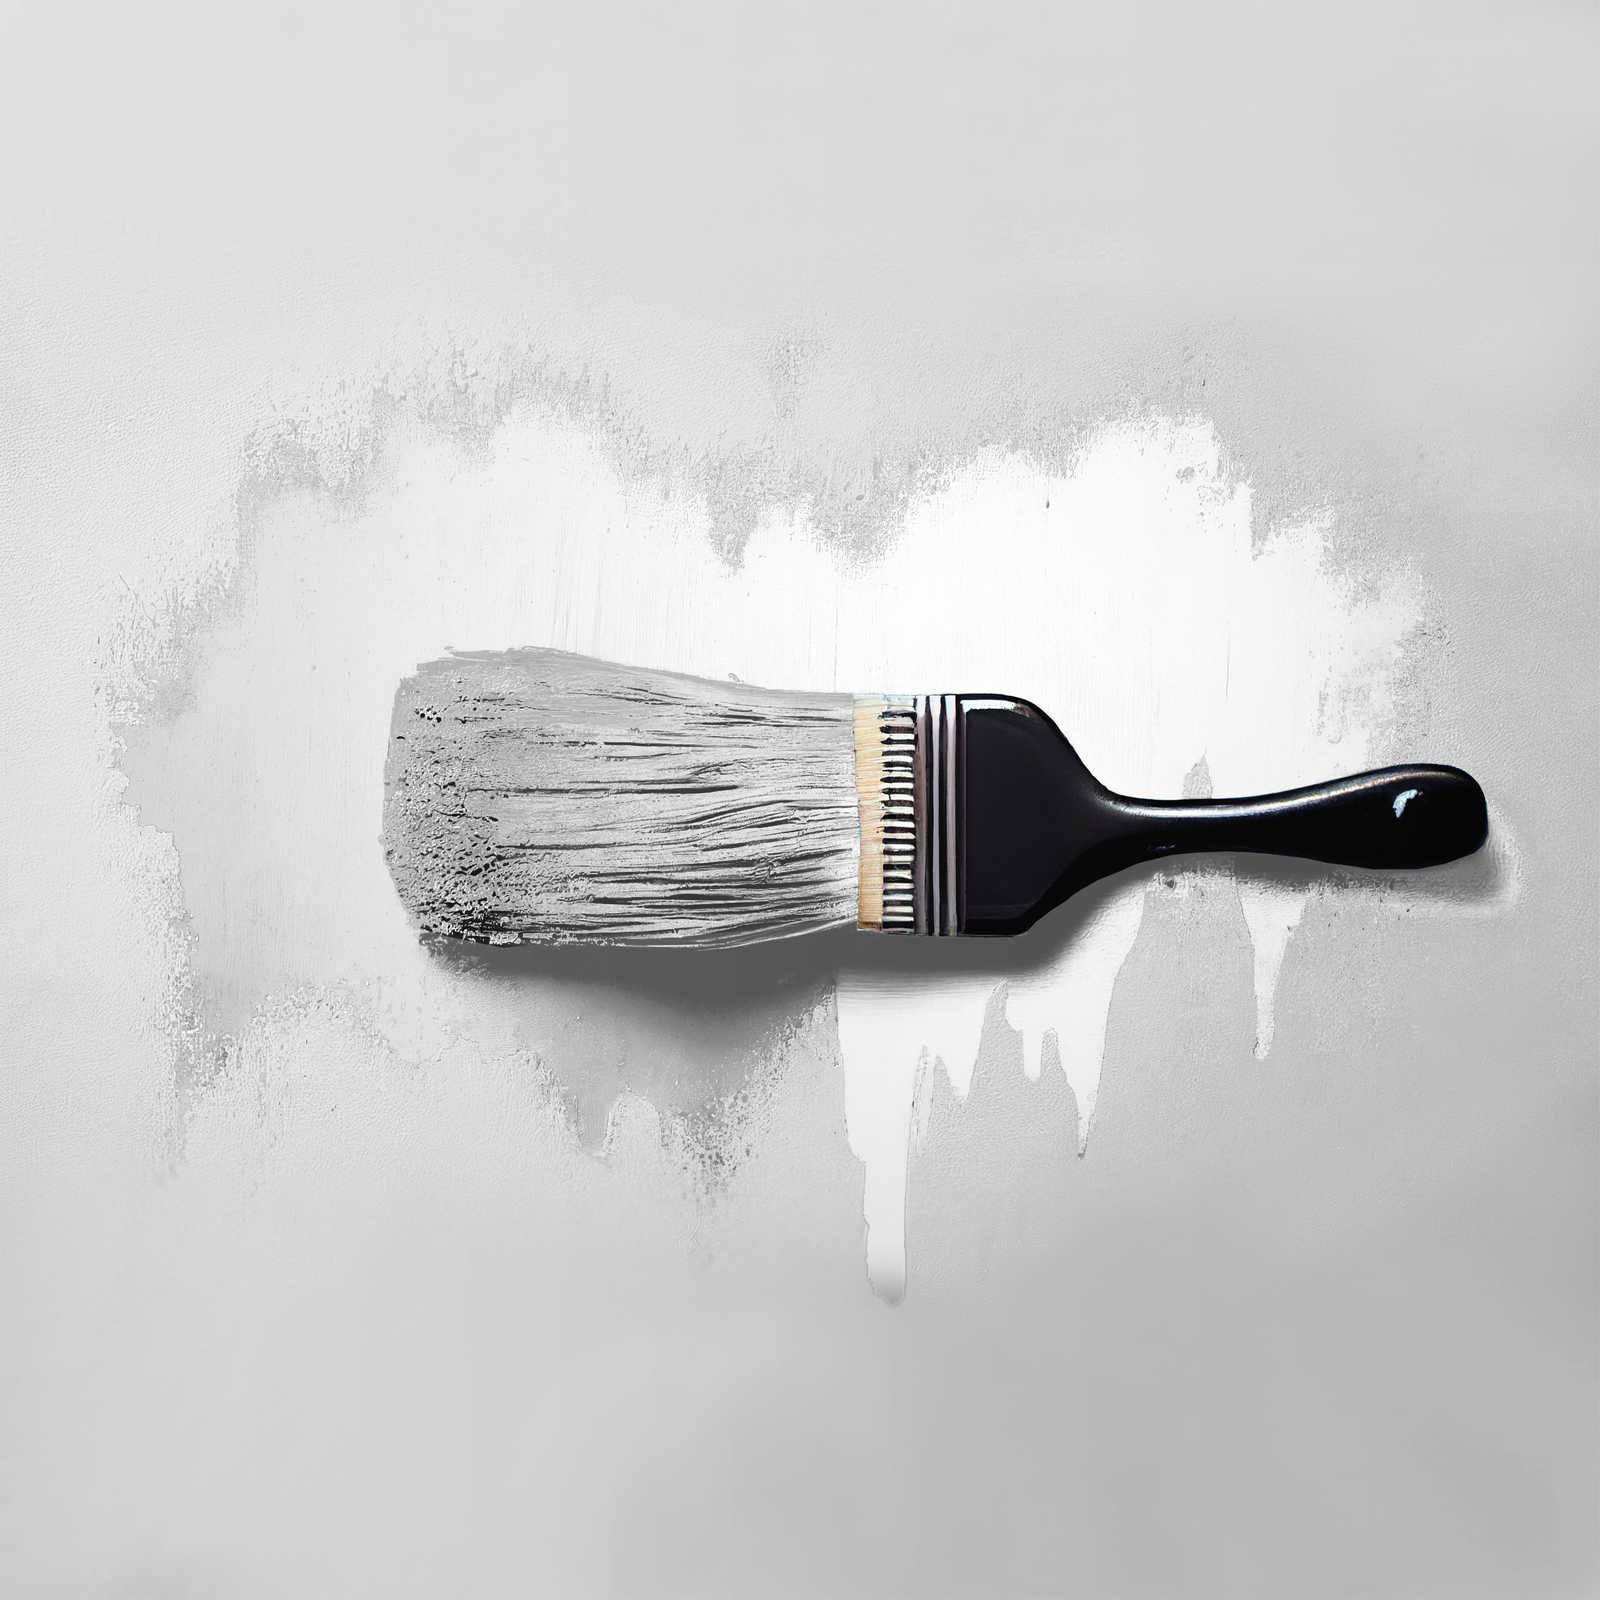             Pittura murale TCK1000 »Melting Marshmellow« in bianco neutro – 10 litri
        